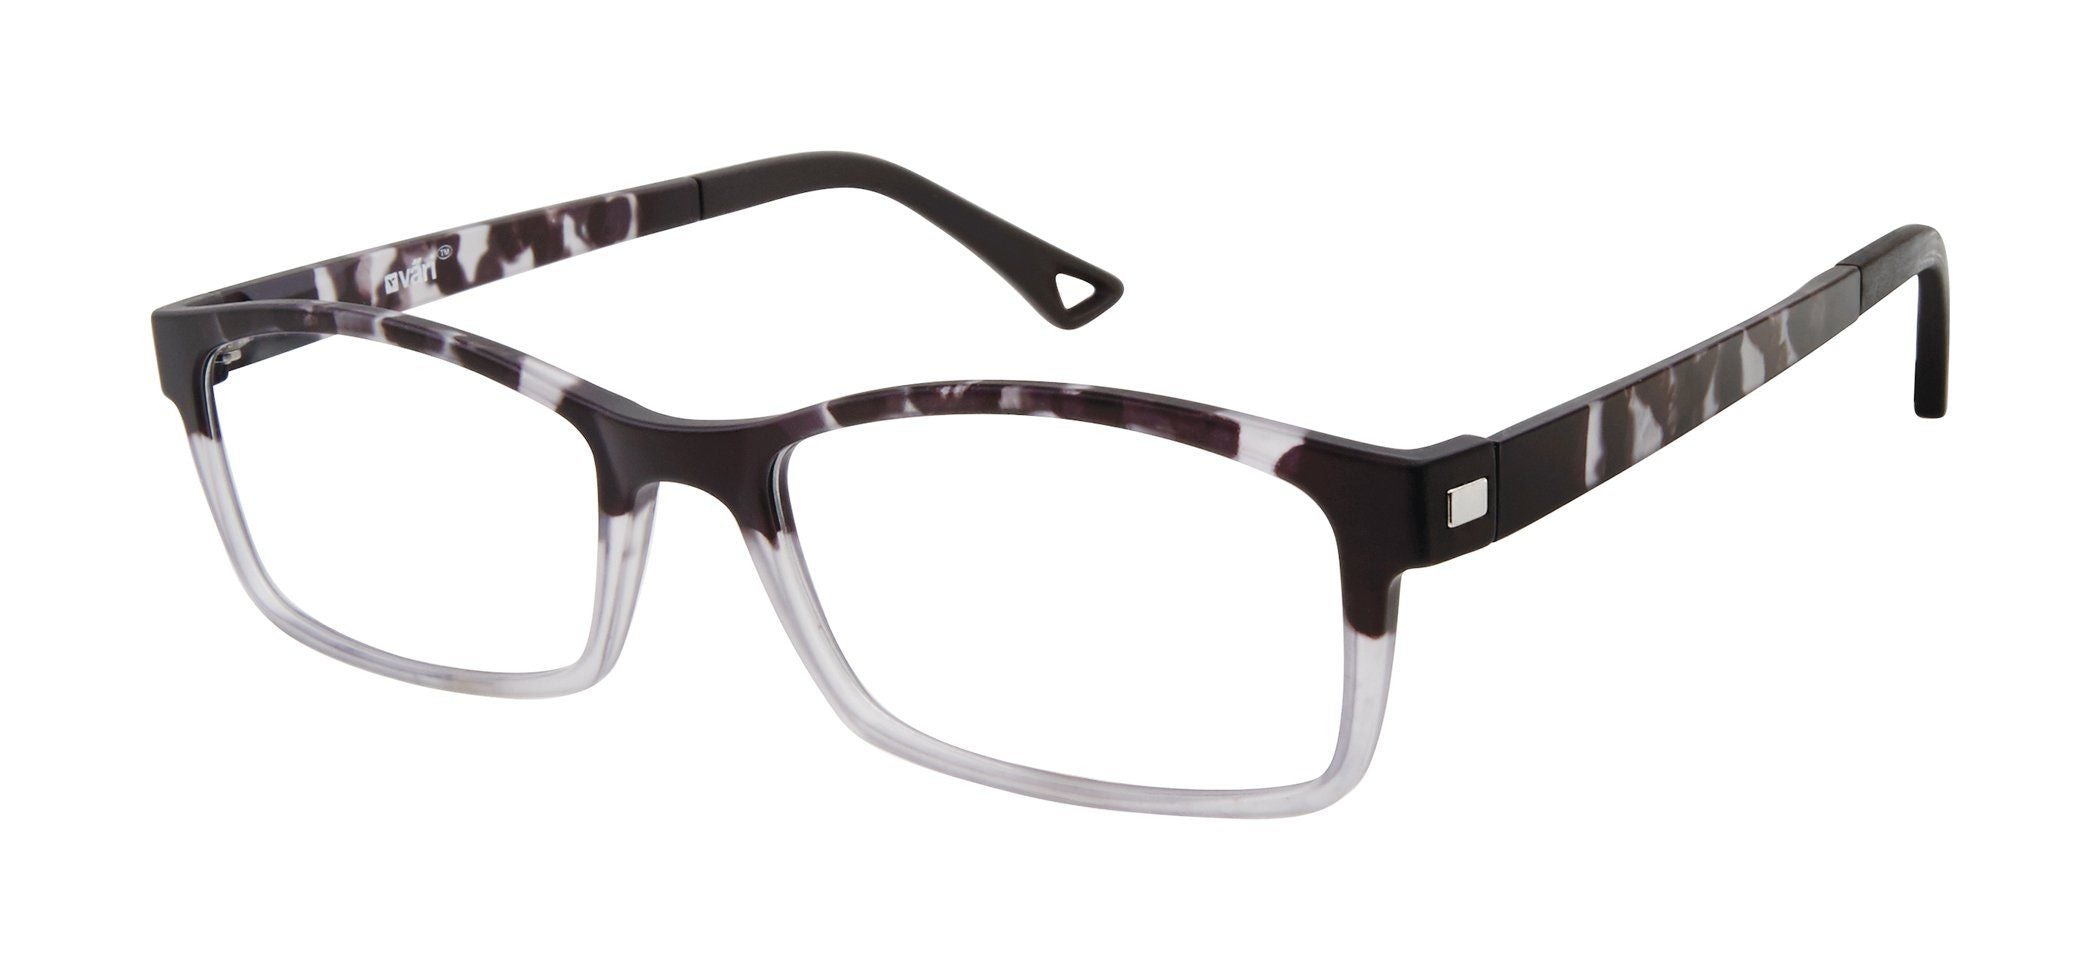 Shop Eyewear - Eye Sunglasses, Best Eyewear Store – Väri Eyewear